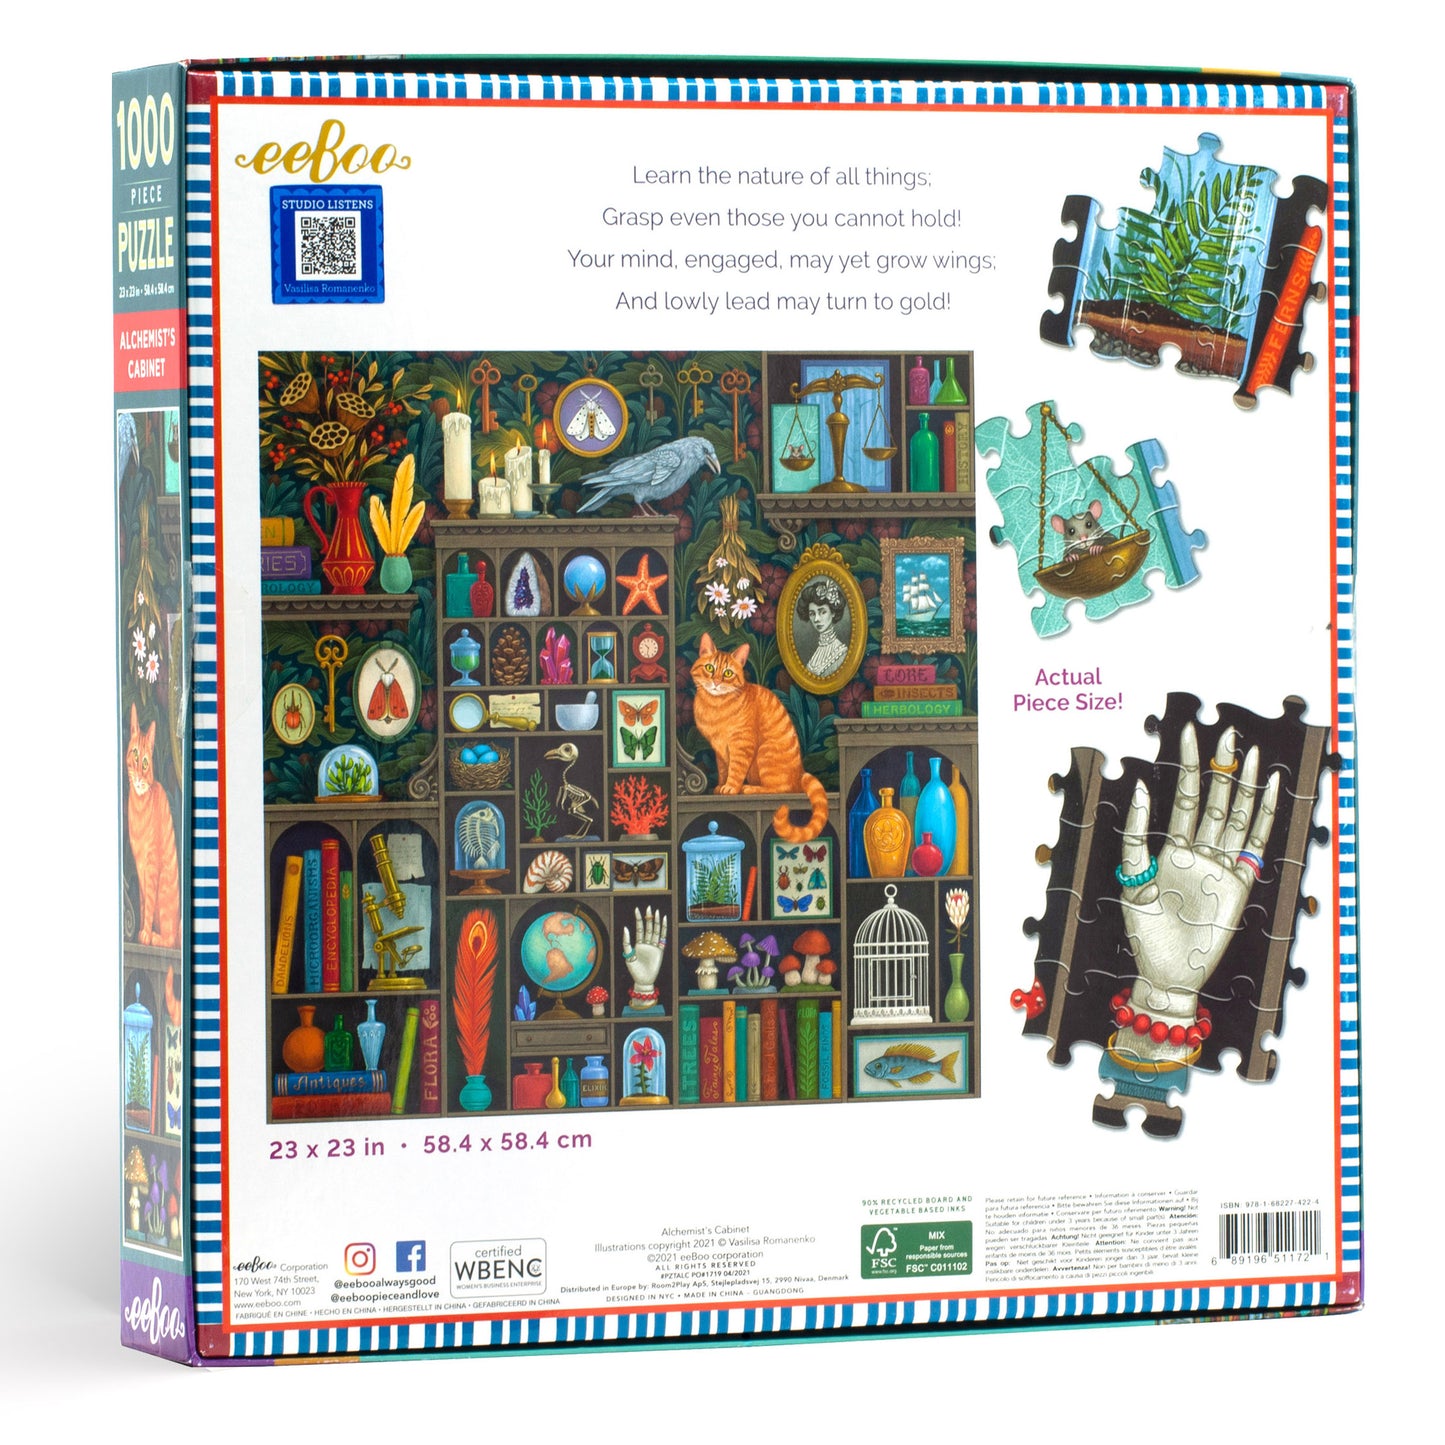 Alchemist's Cabinet 1000 Piece Jigsaw Puzzle | eeBoo Piece & Love | Makes a Great Gift